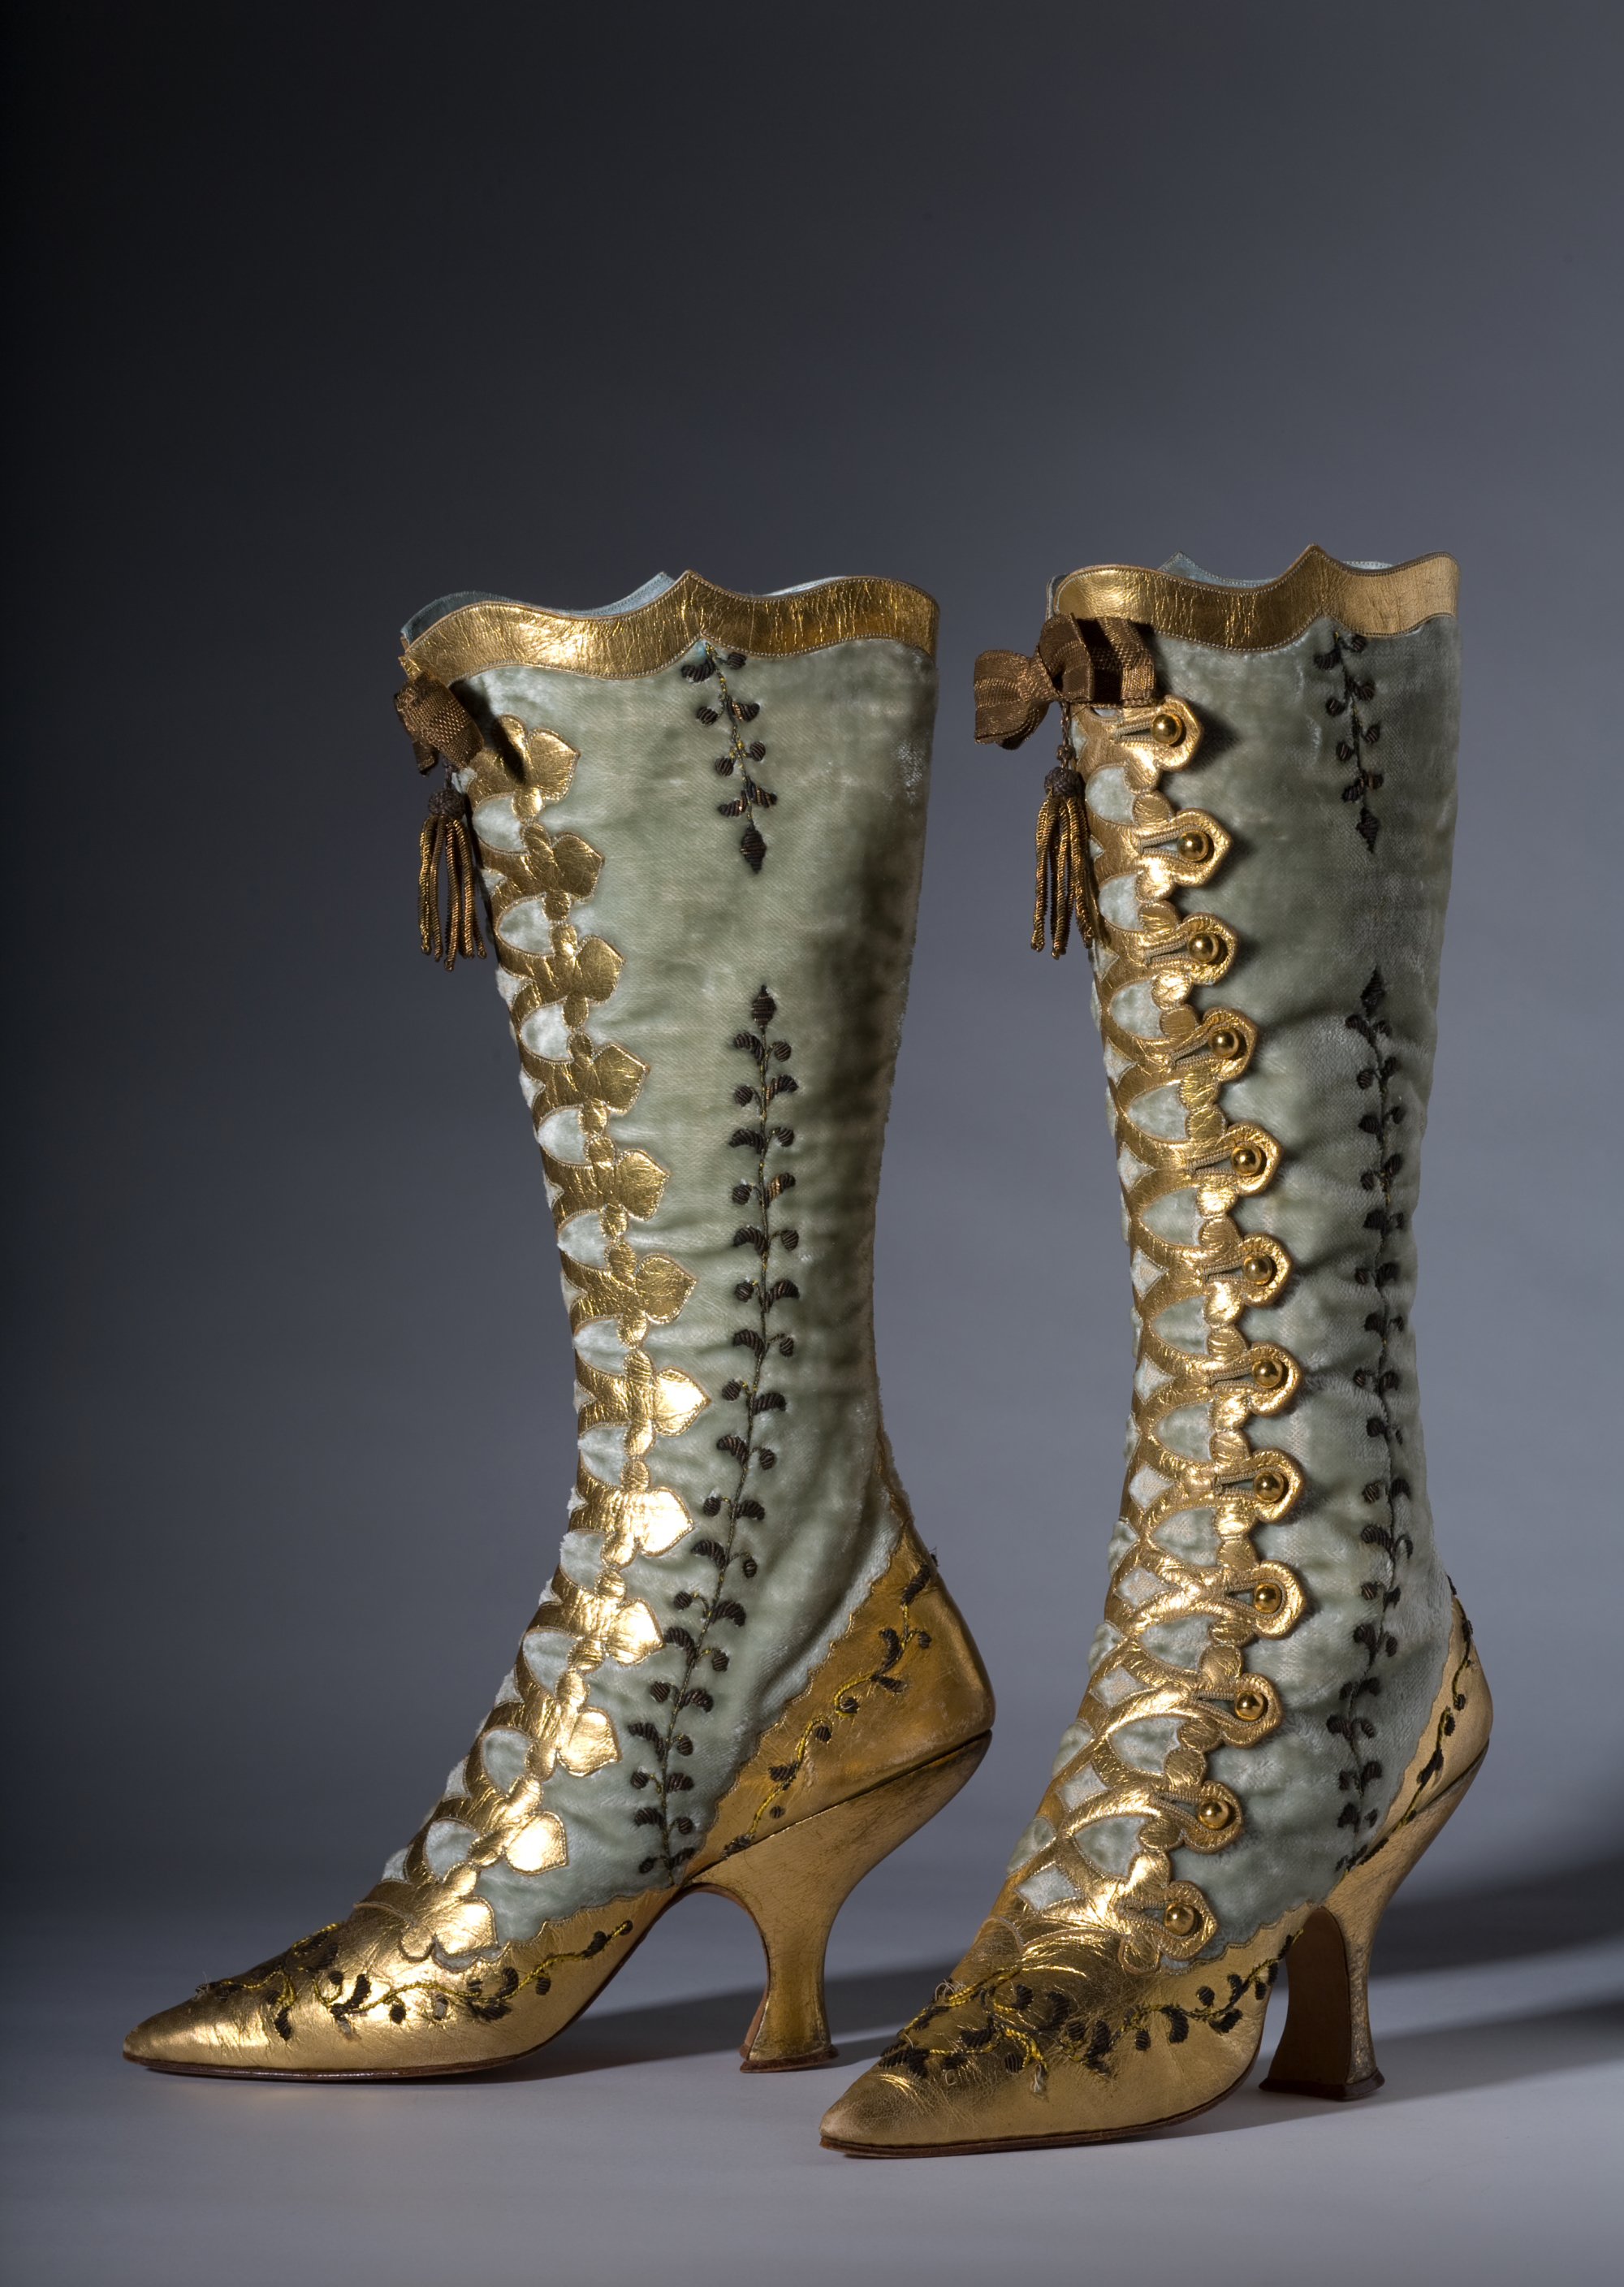 History and origin of high heels